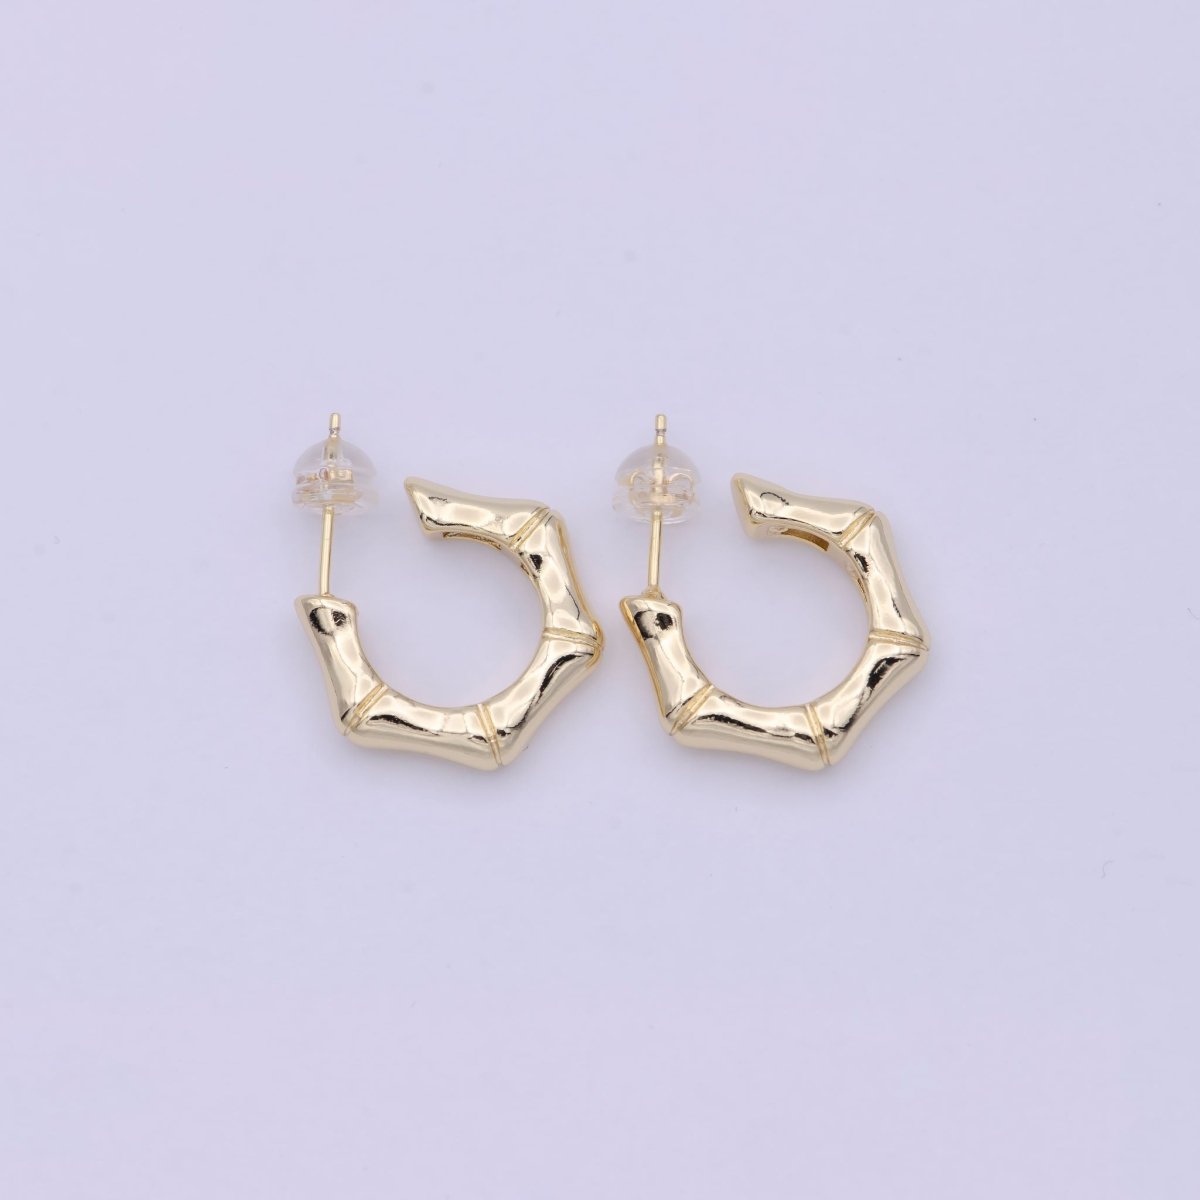 Dainty Bamboo Design Gold hoop Earring 22mm Everyday Wear Jewelry T-259 - DLUXCA